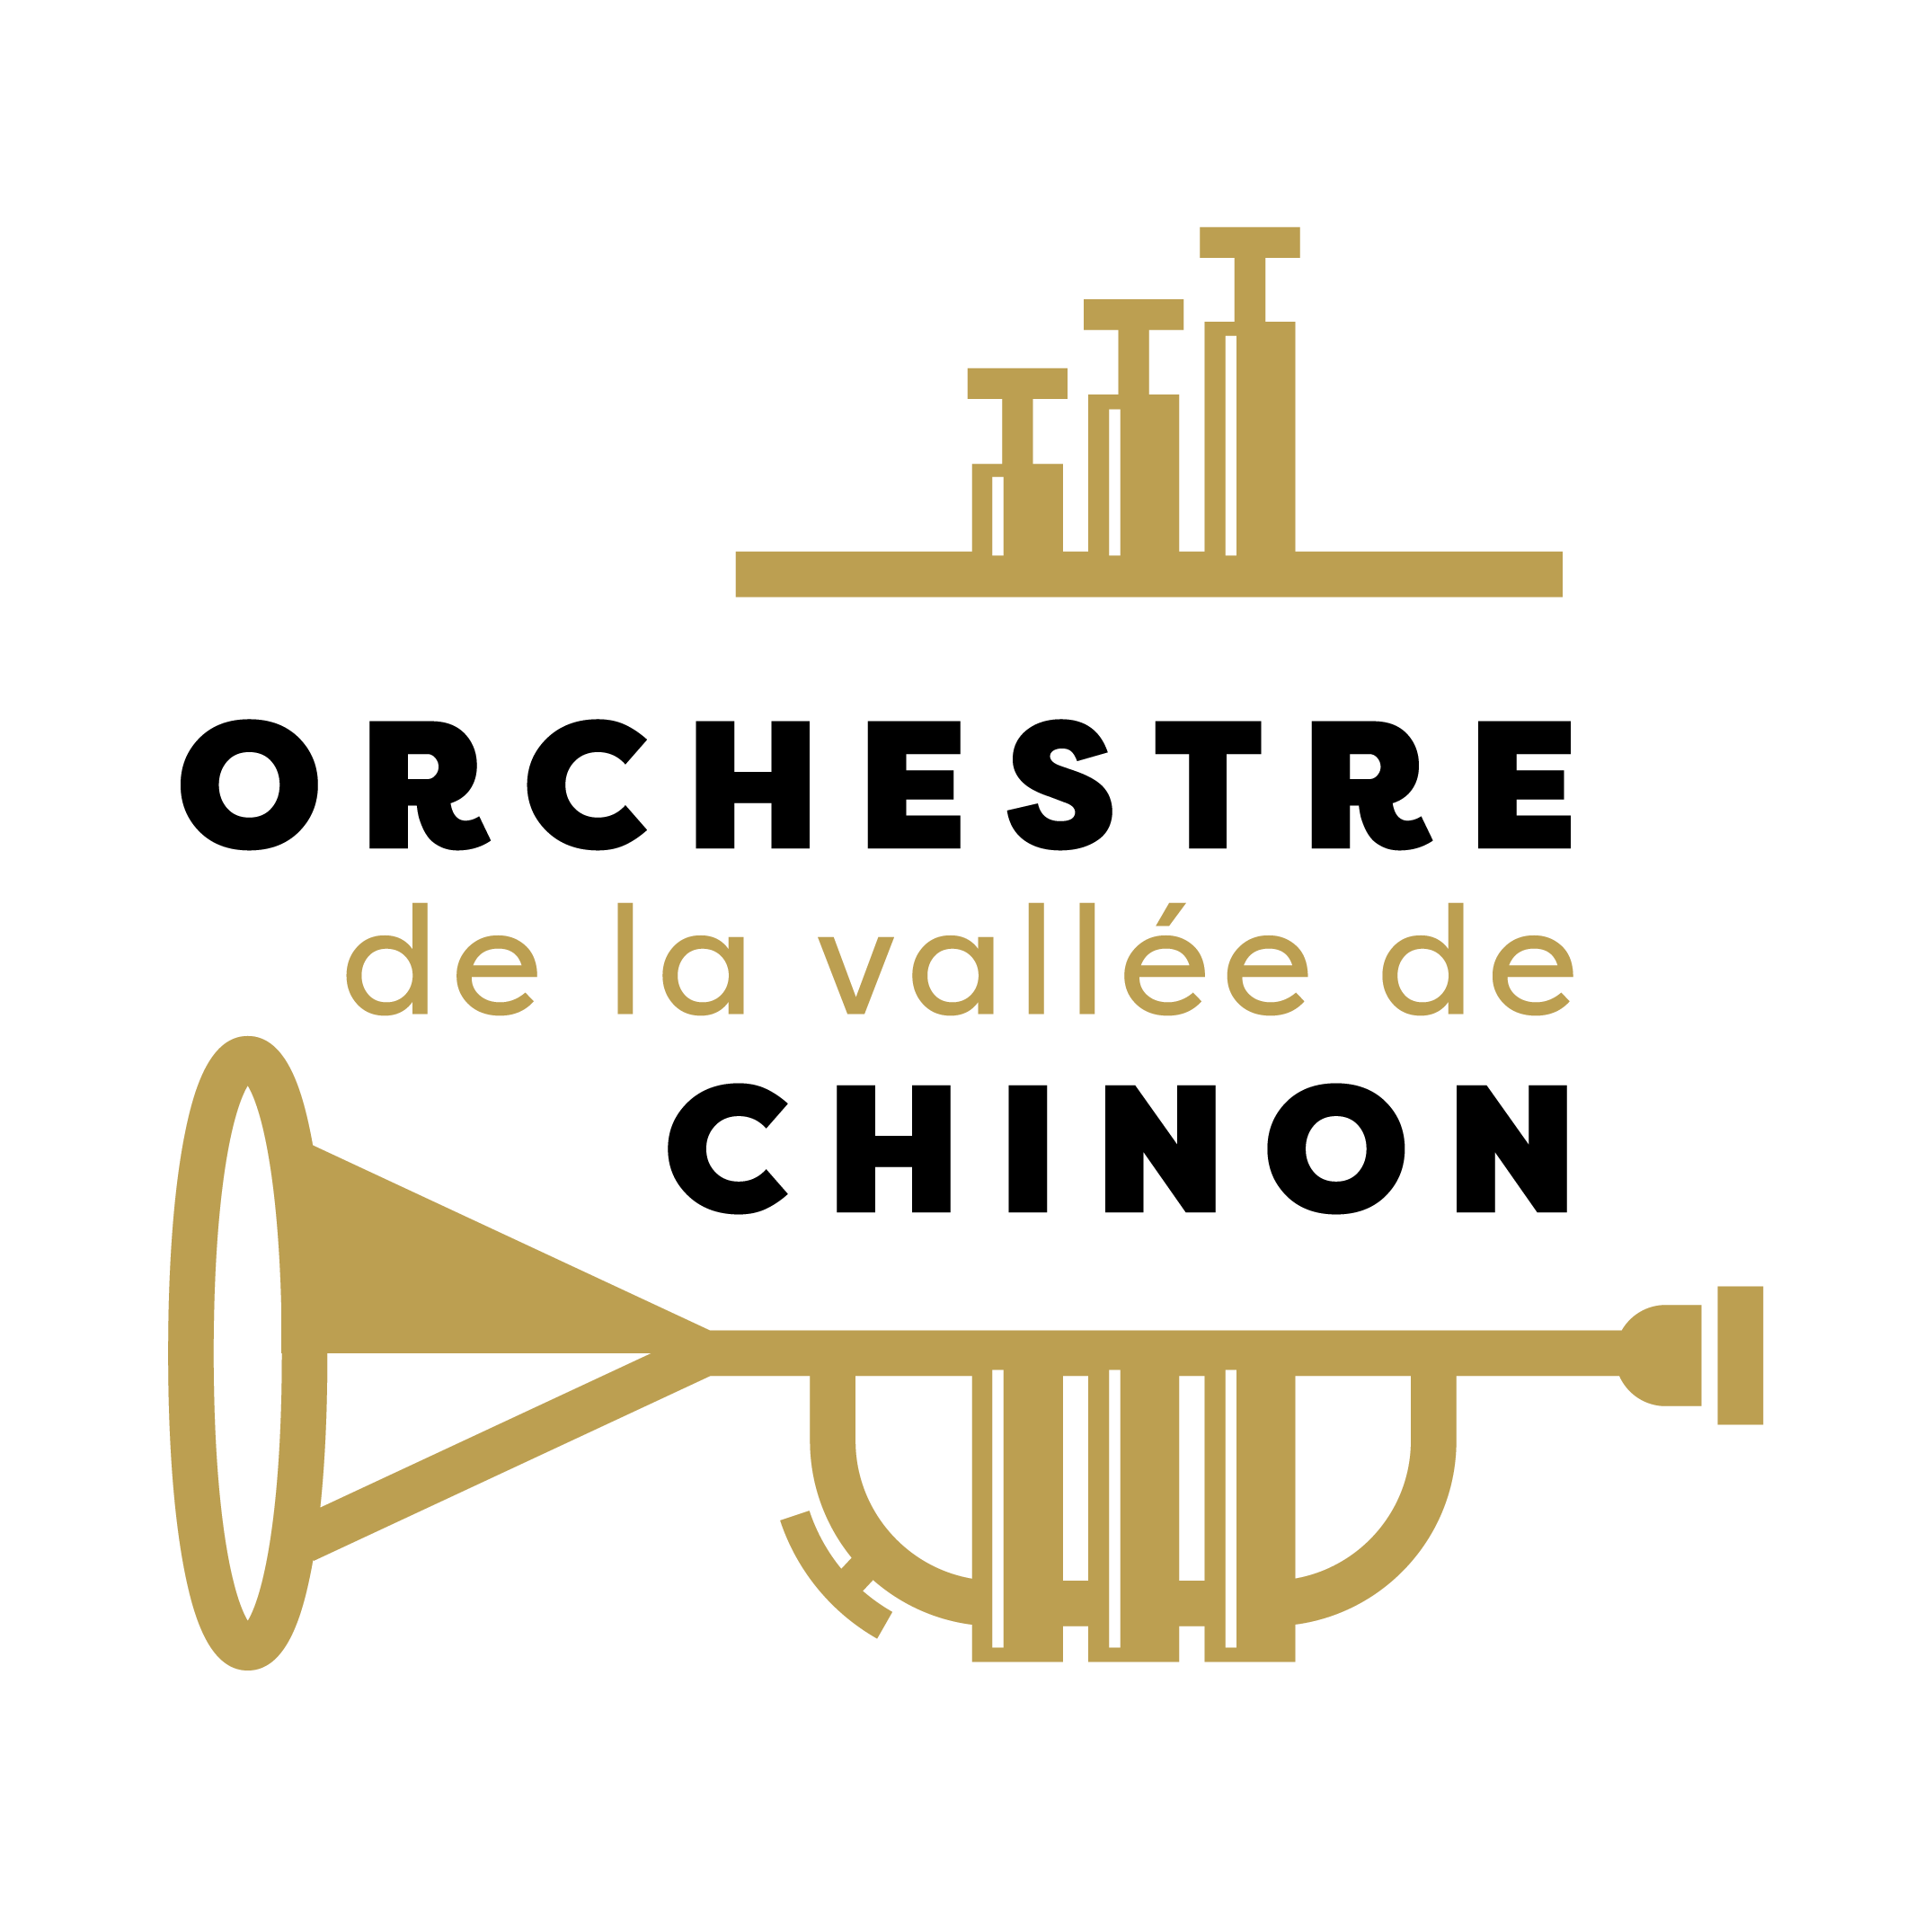 Orchestre de la vallée de Chinon